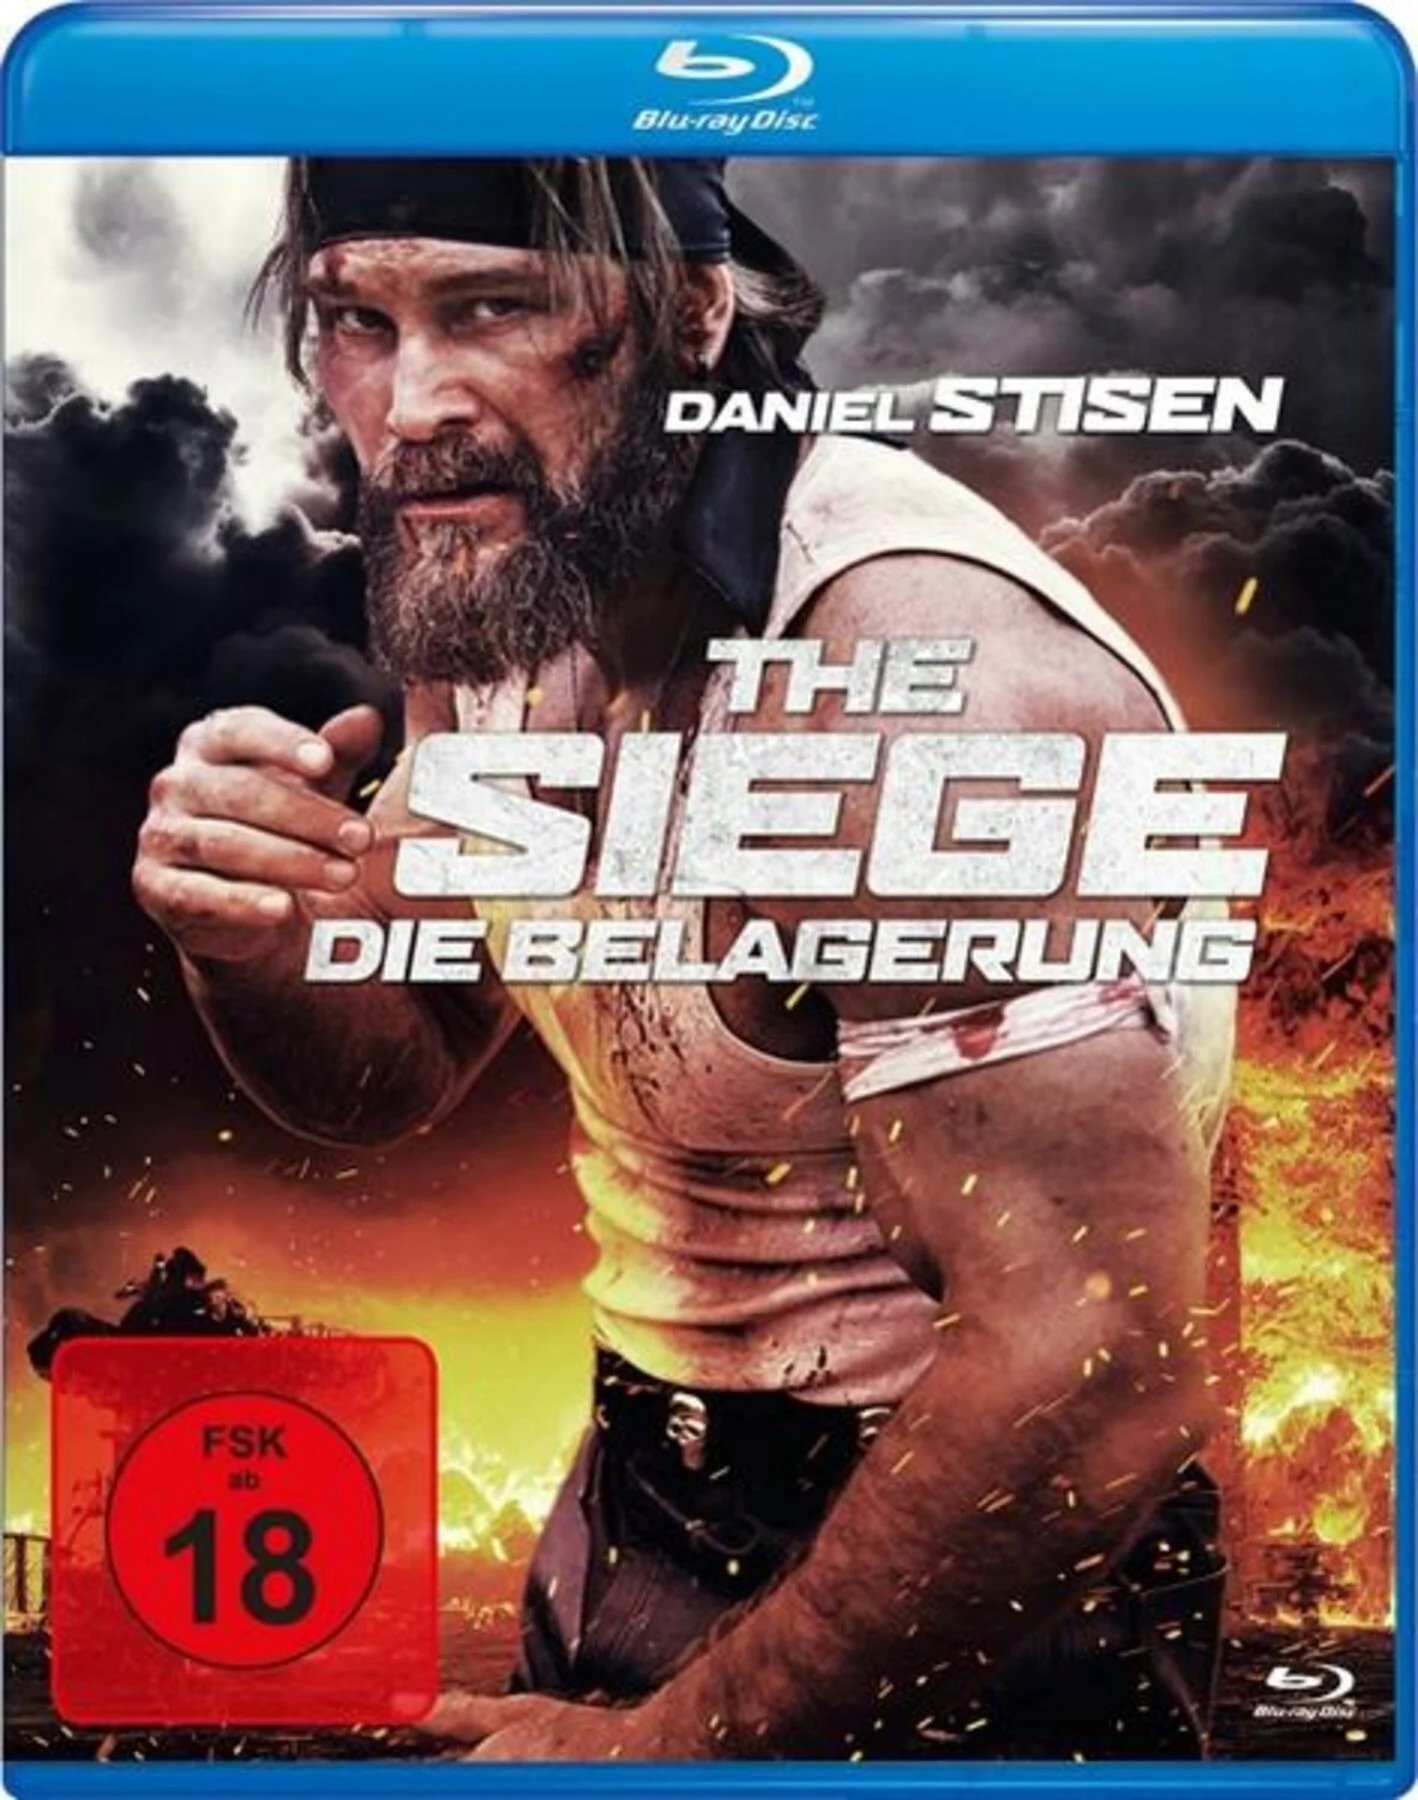 The Siege Die Belagerung Trailer & Blu-ray Cover